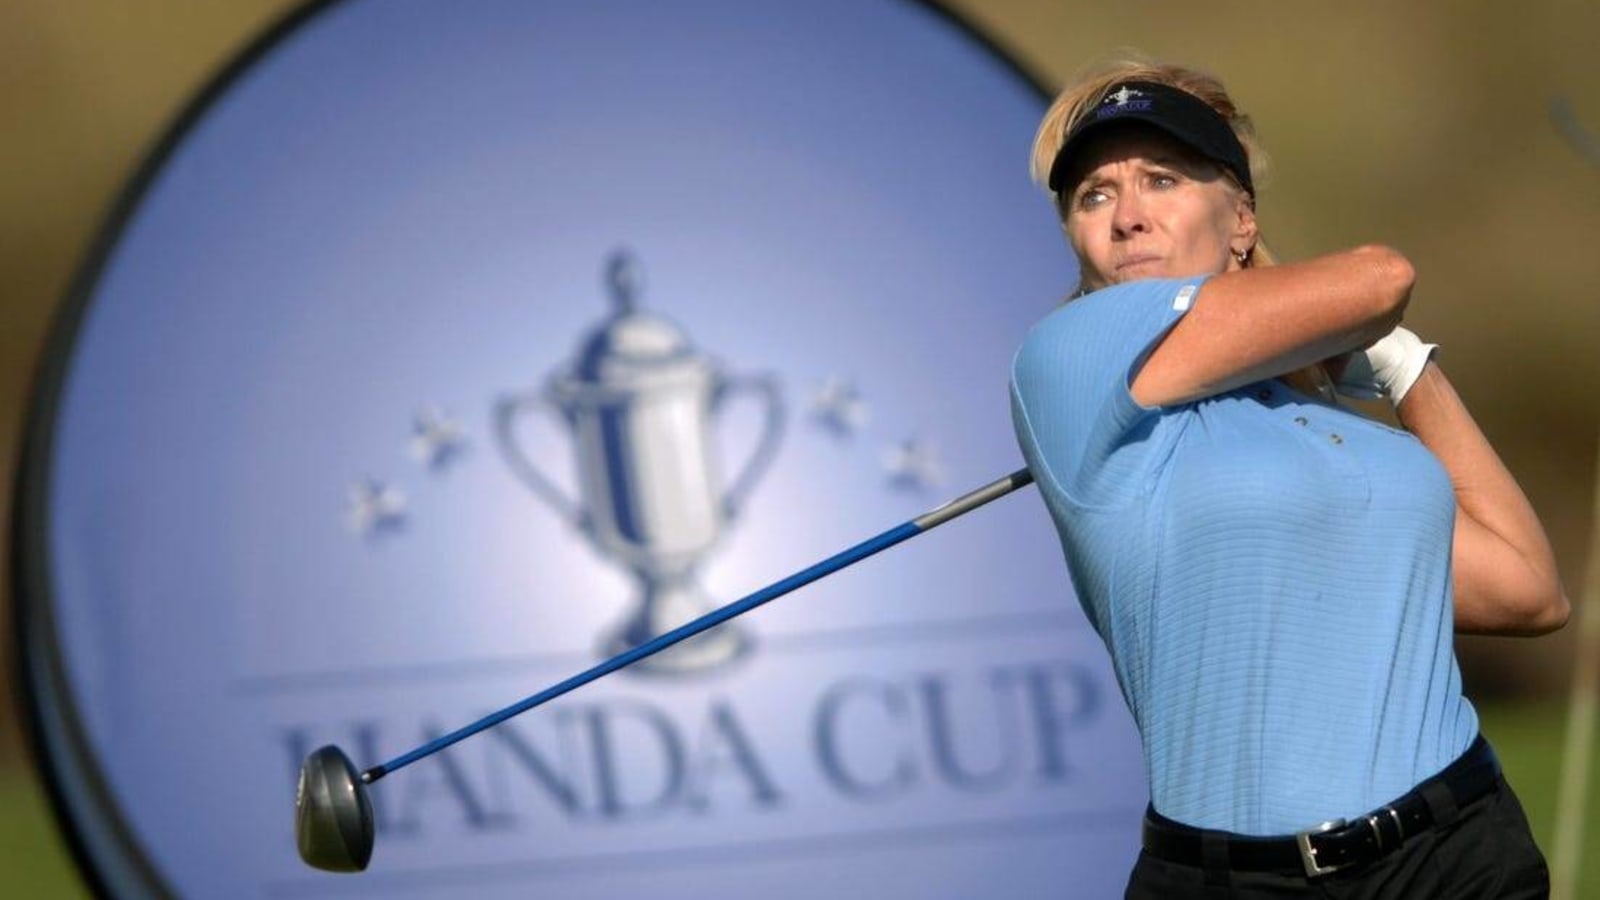 World Golf Hall of Famer Jan Stephenson battling breast cancer